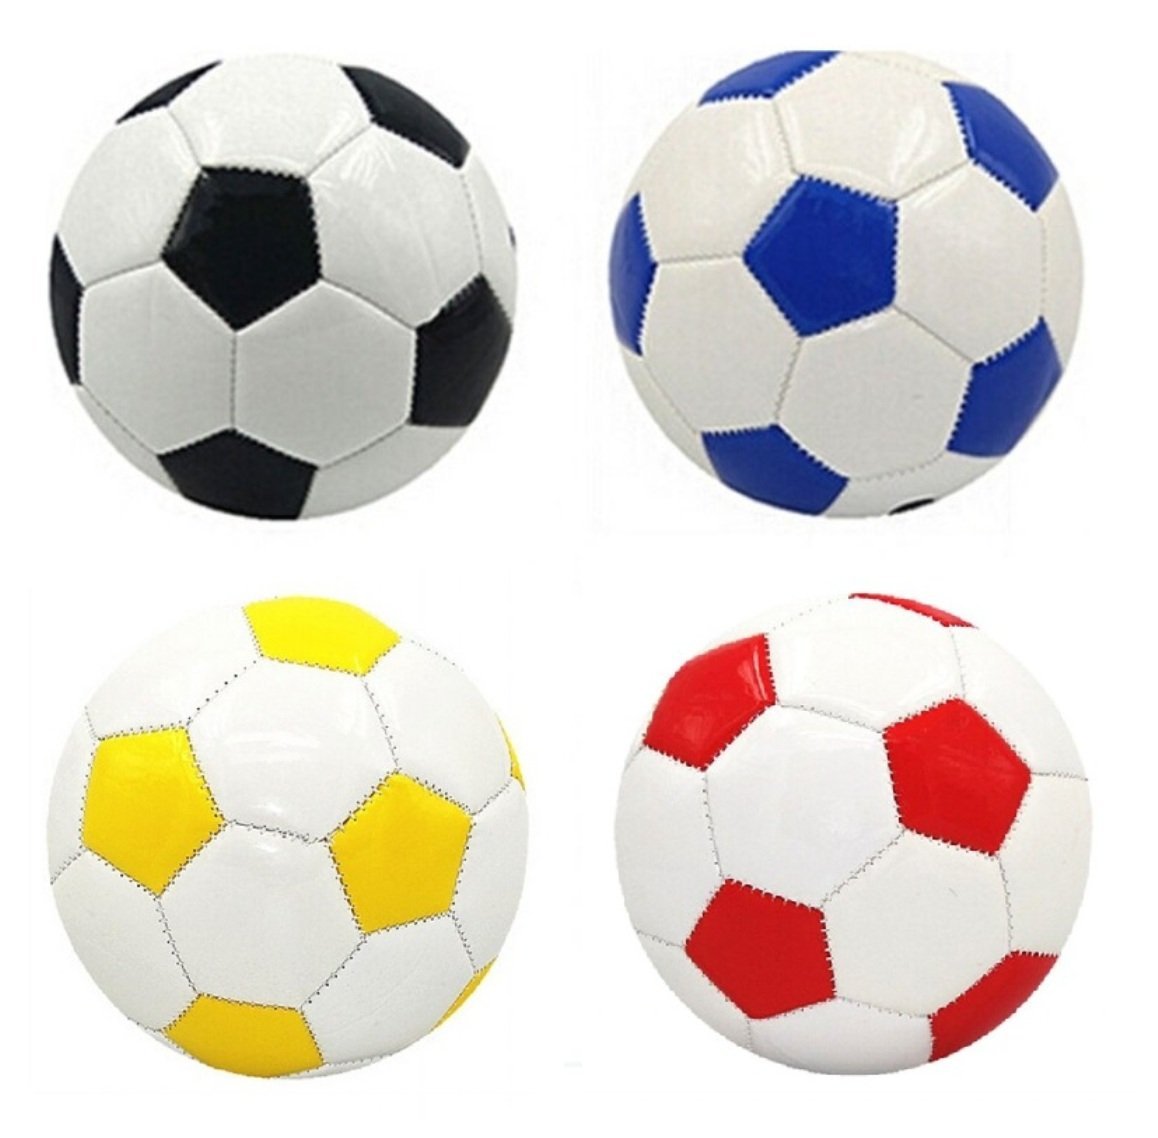 Classic Mini Soccer Ball Free Bungee Net Size 2